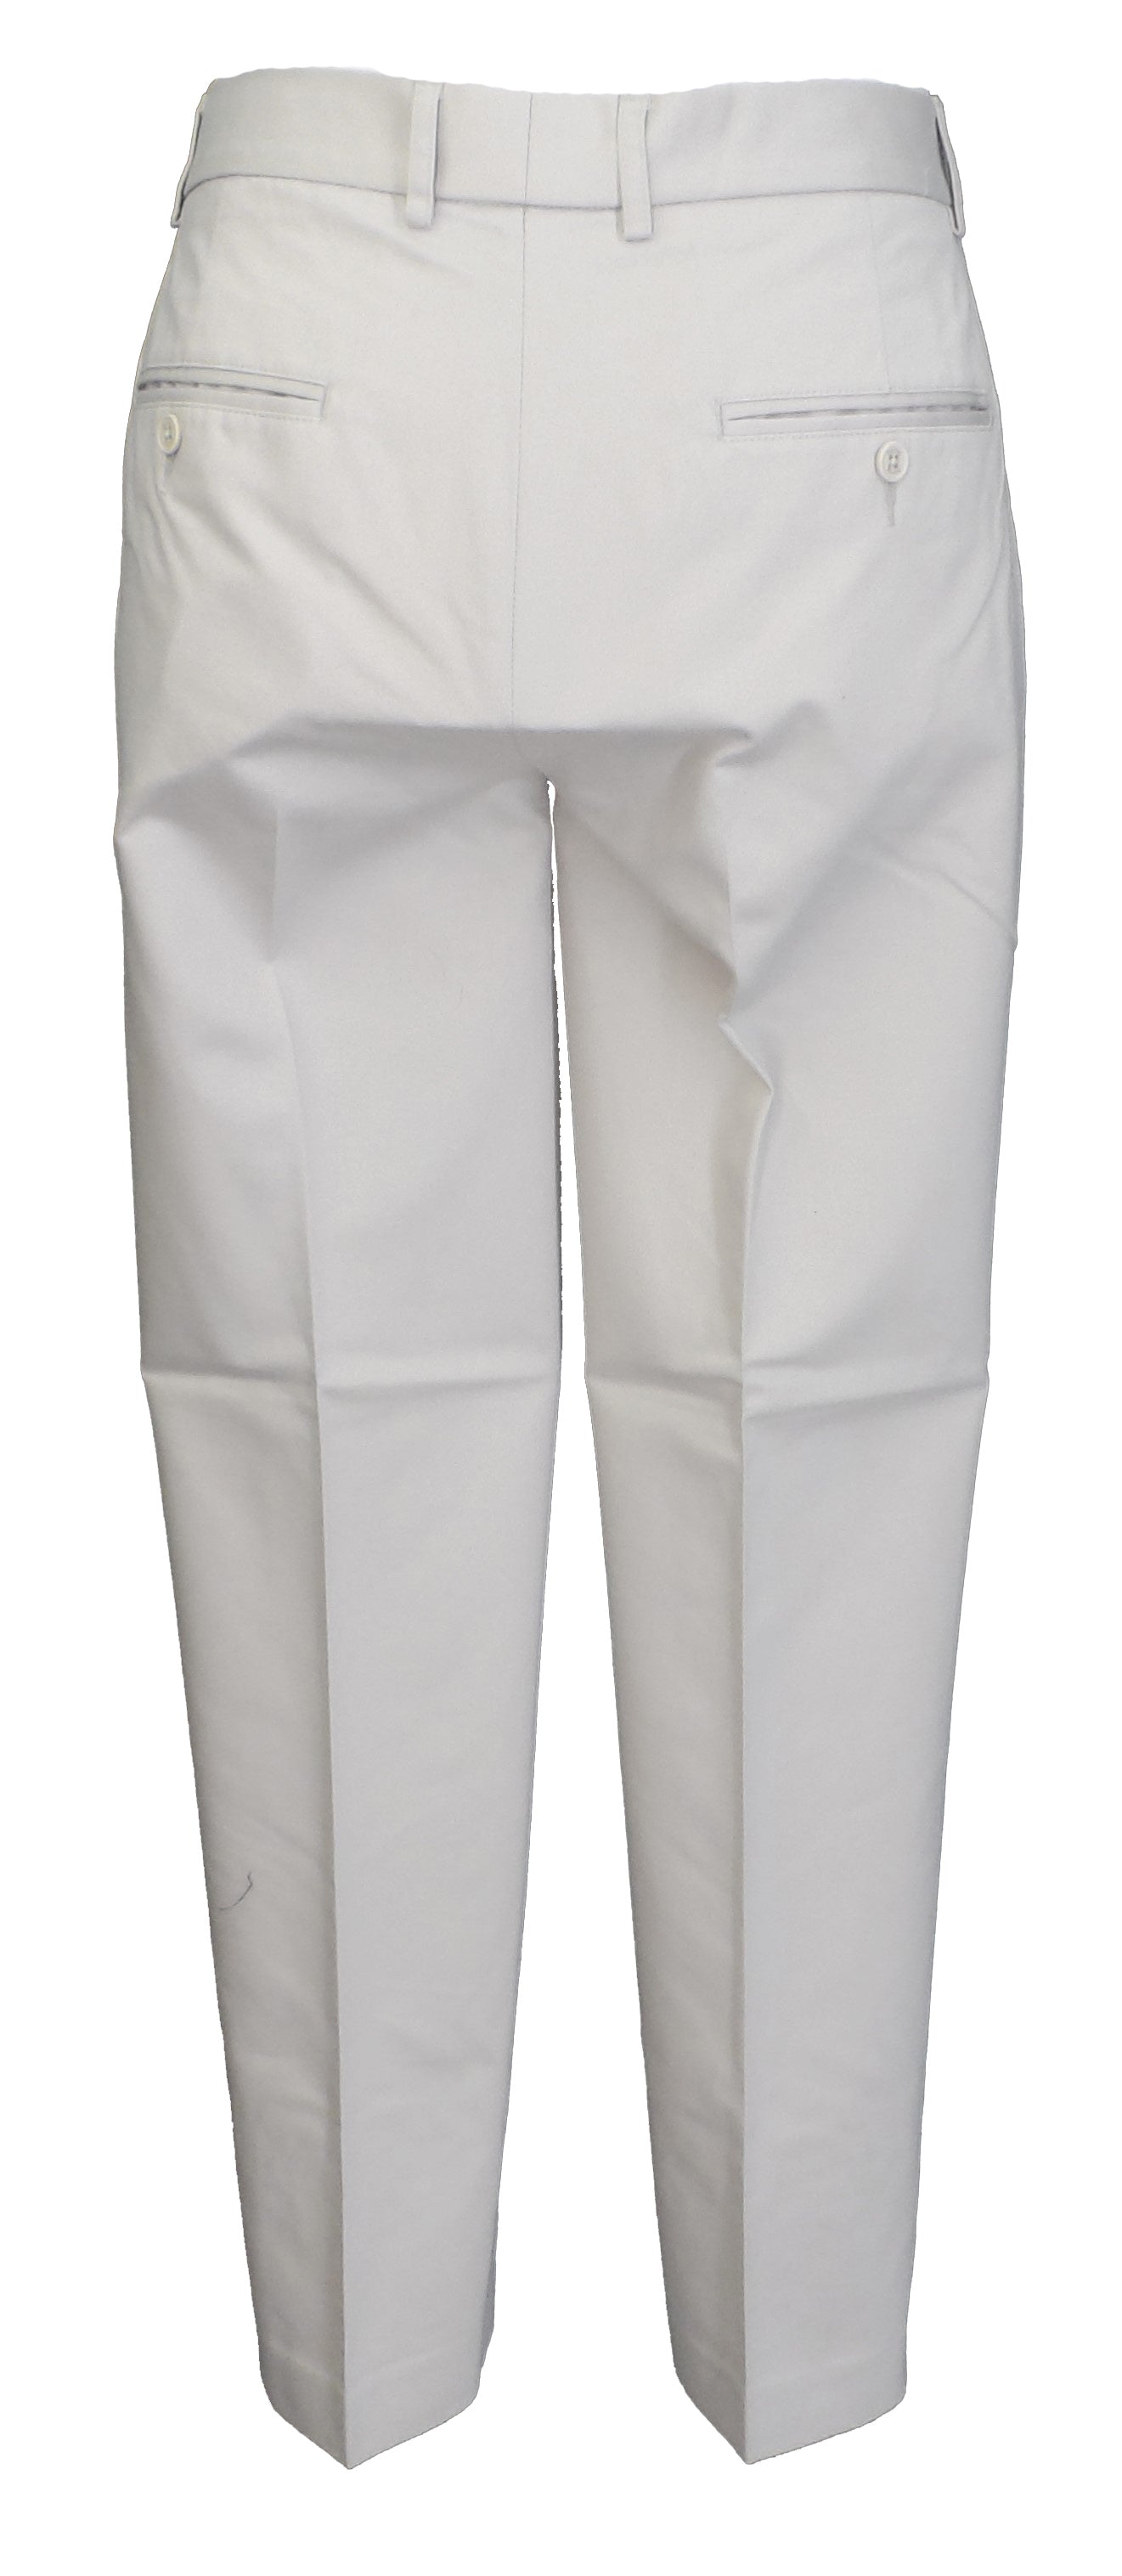 Sta Press Trousers 60s Style Mod Classic Beige Men's Trouser - Etsy